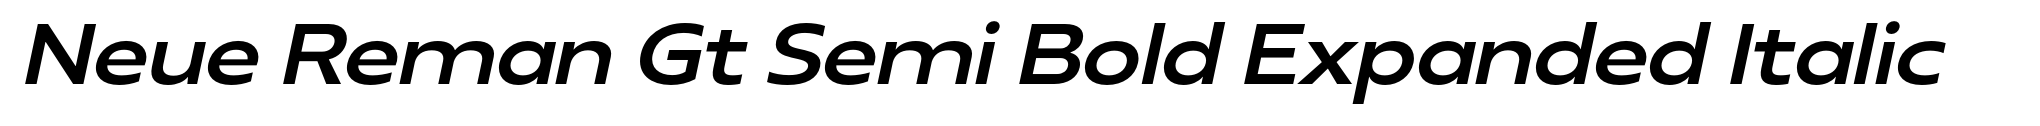 Neue Reman Gt Semi Bold Expanded Italic image